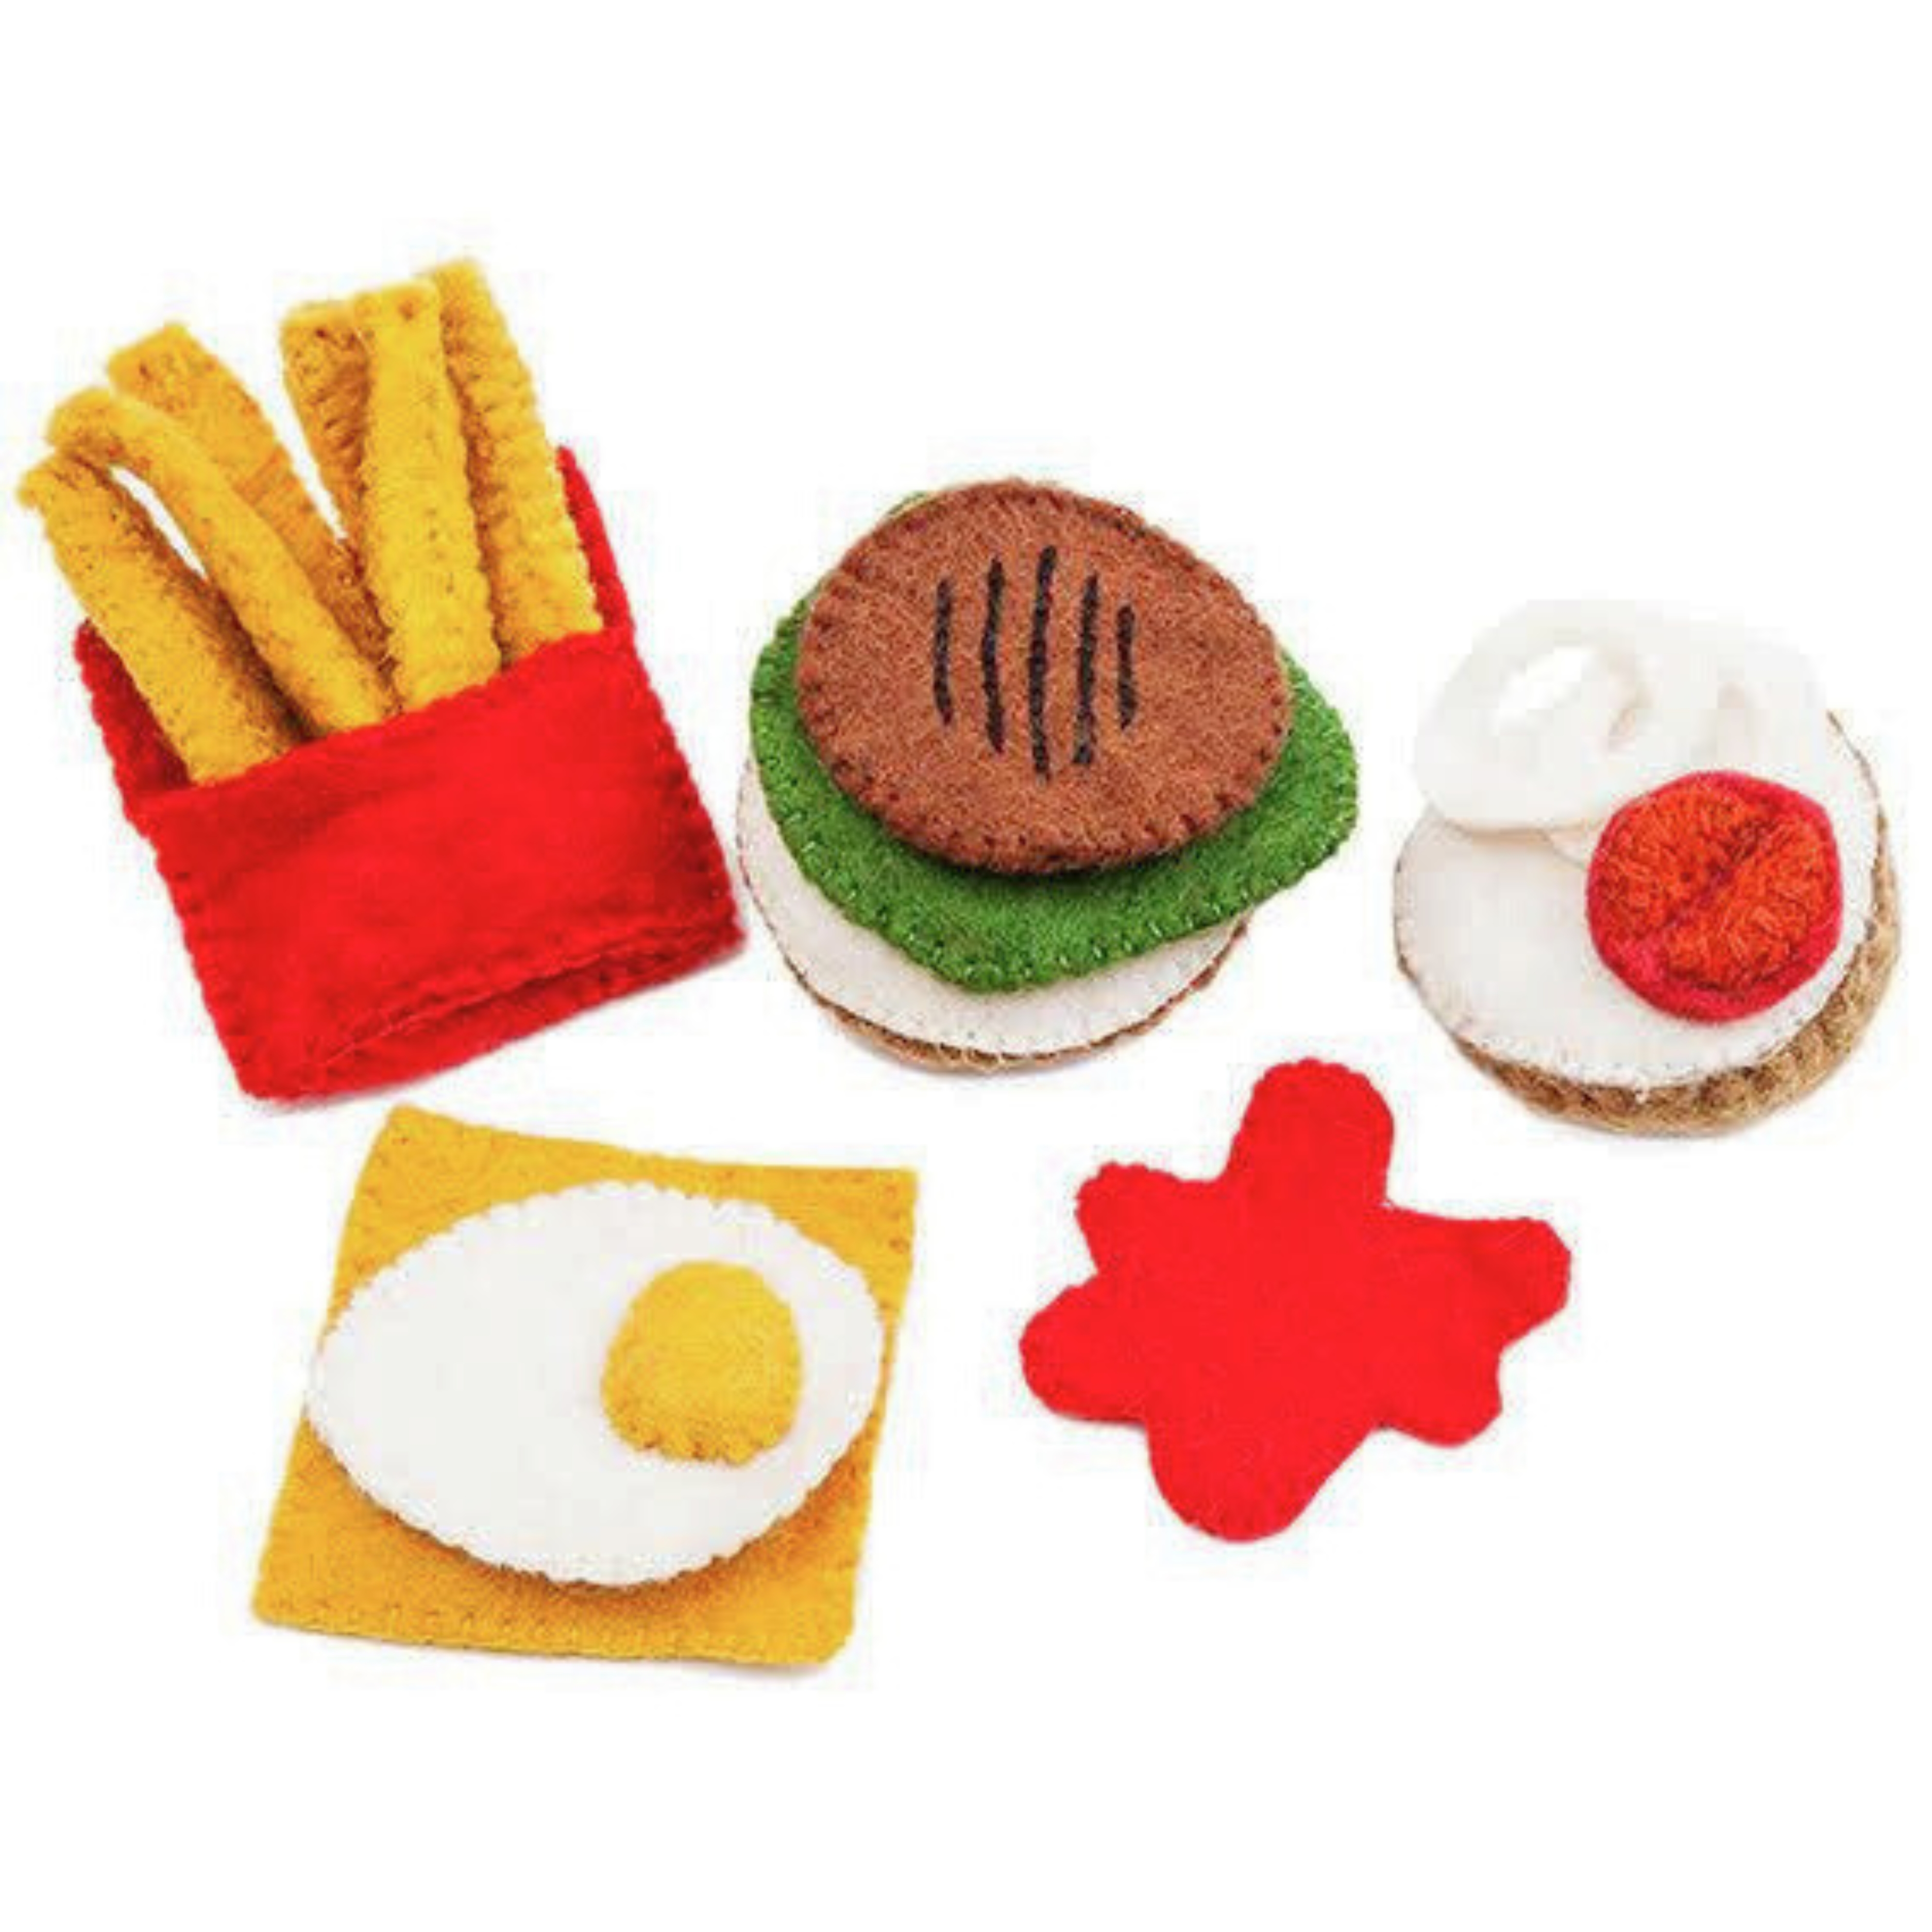 Food - Burger and Fries Set